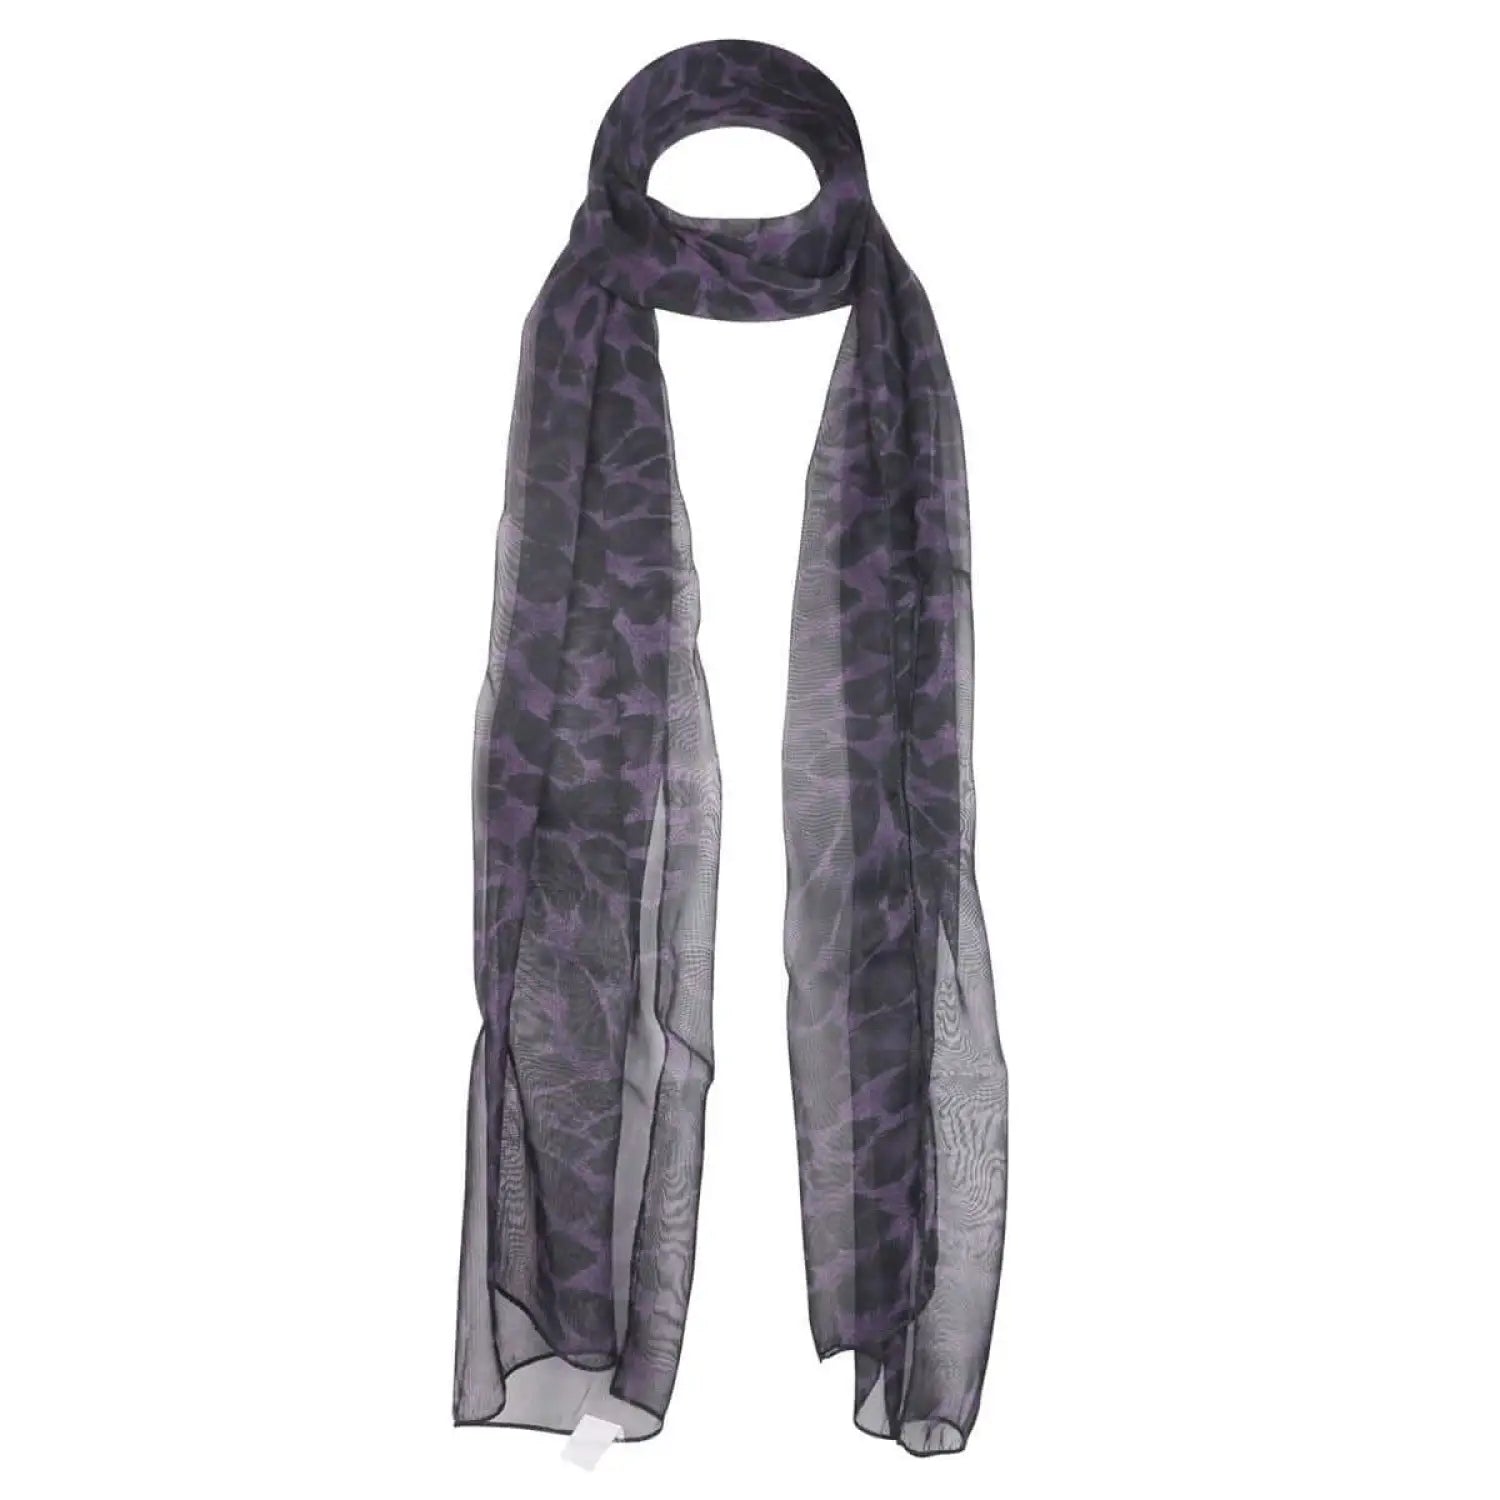 Stylish leopard print chiffon scarf with black and white design